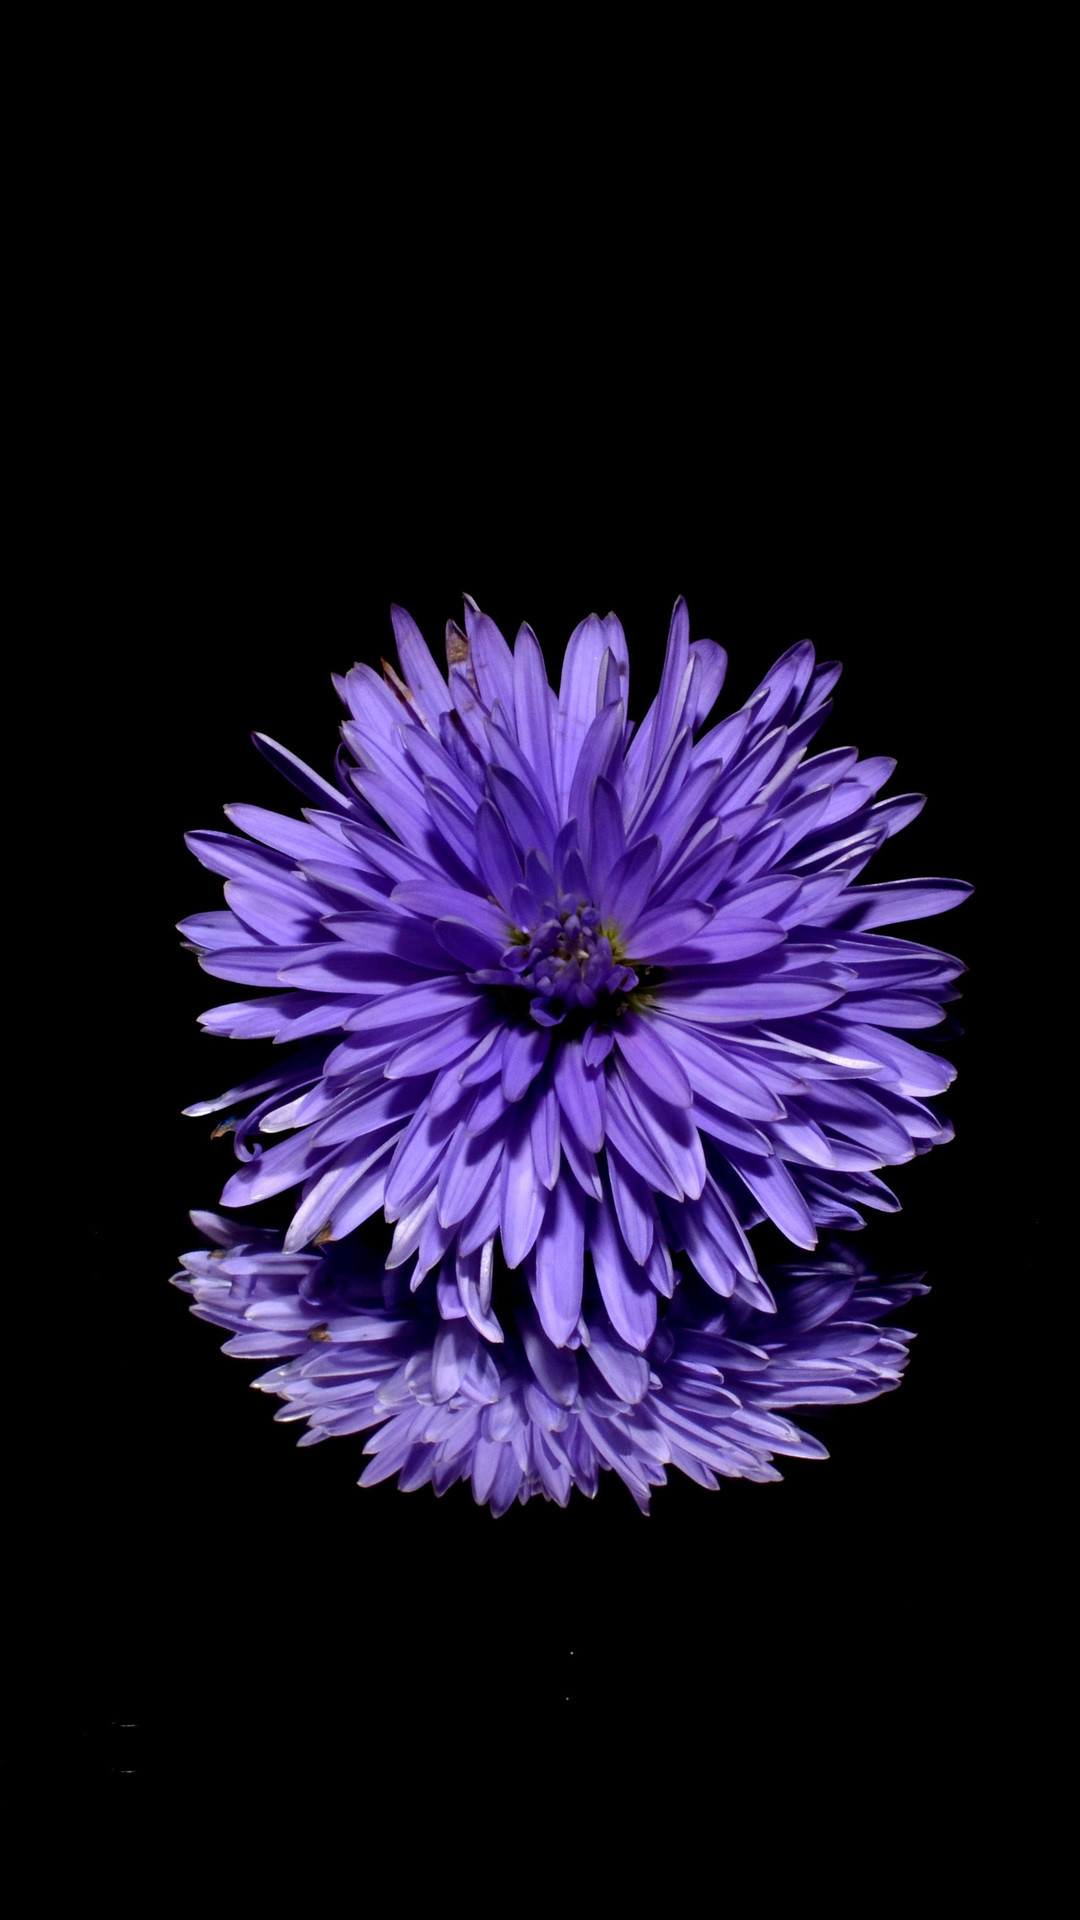 1080x1920 blossom-purple-flower-black-background-reflection-7r.jpg